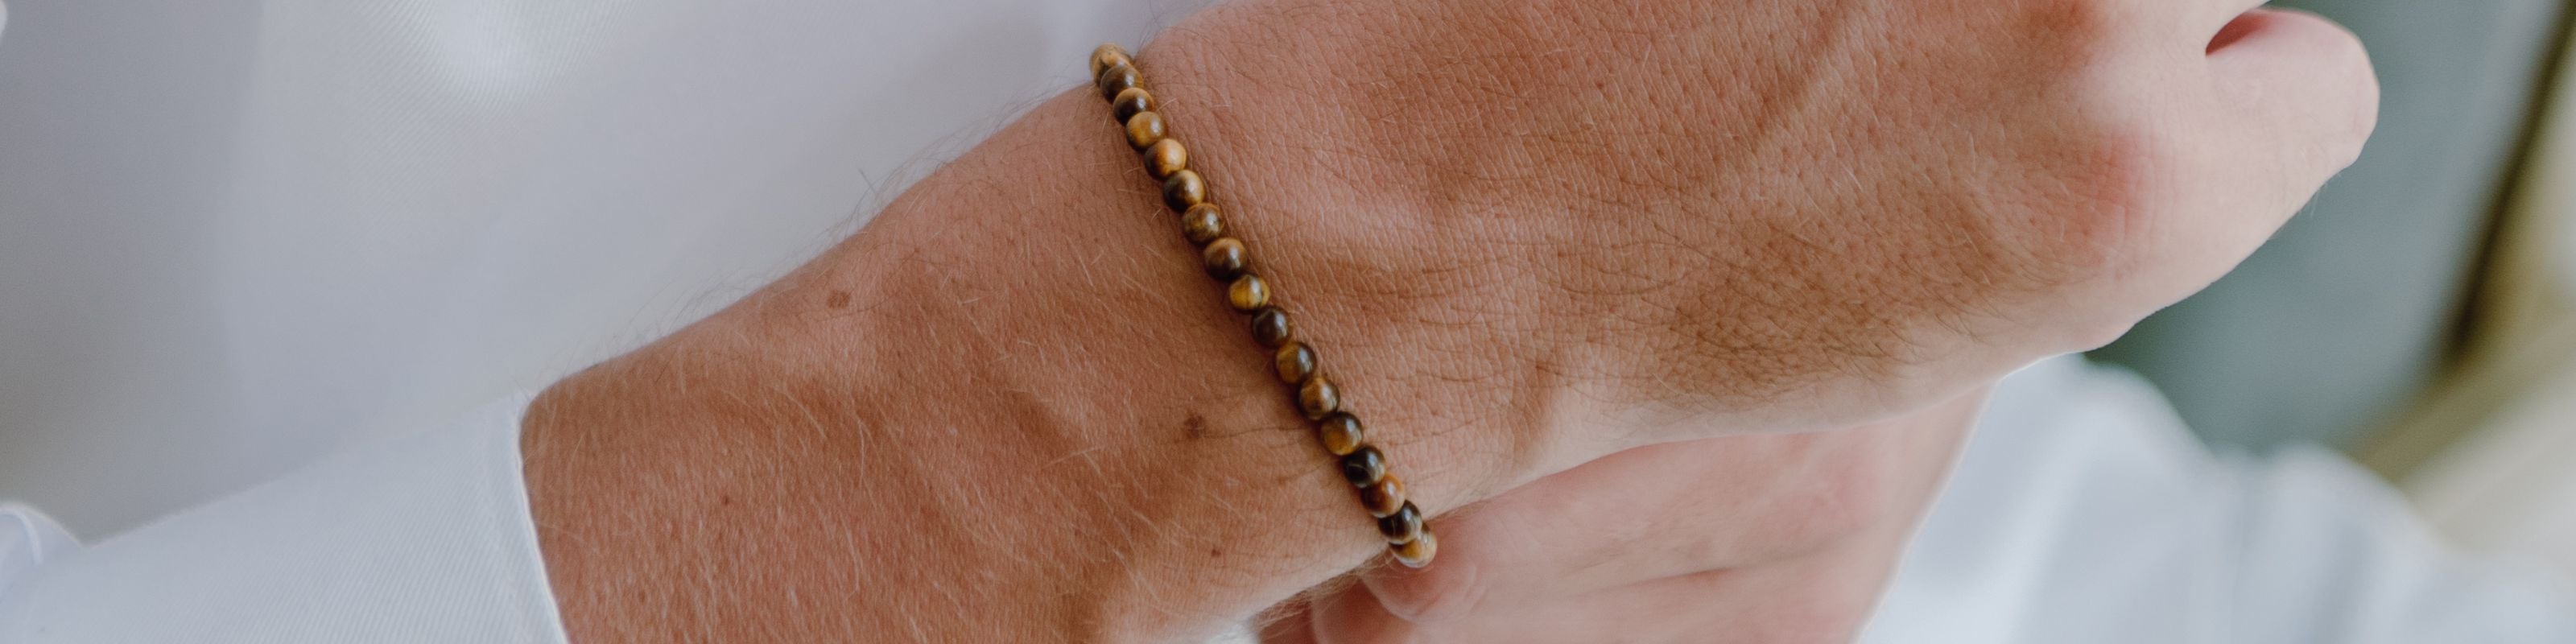 Natural Round Tiger Eye Stone Lucky Beads Men Woman Jewelry Making Bracelets  | eBay